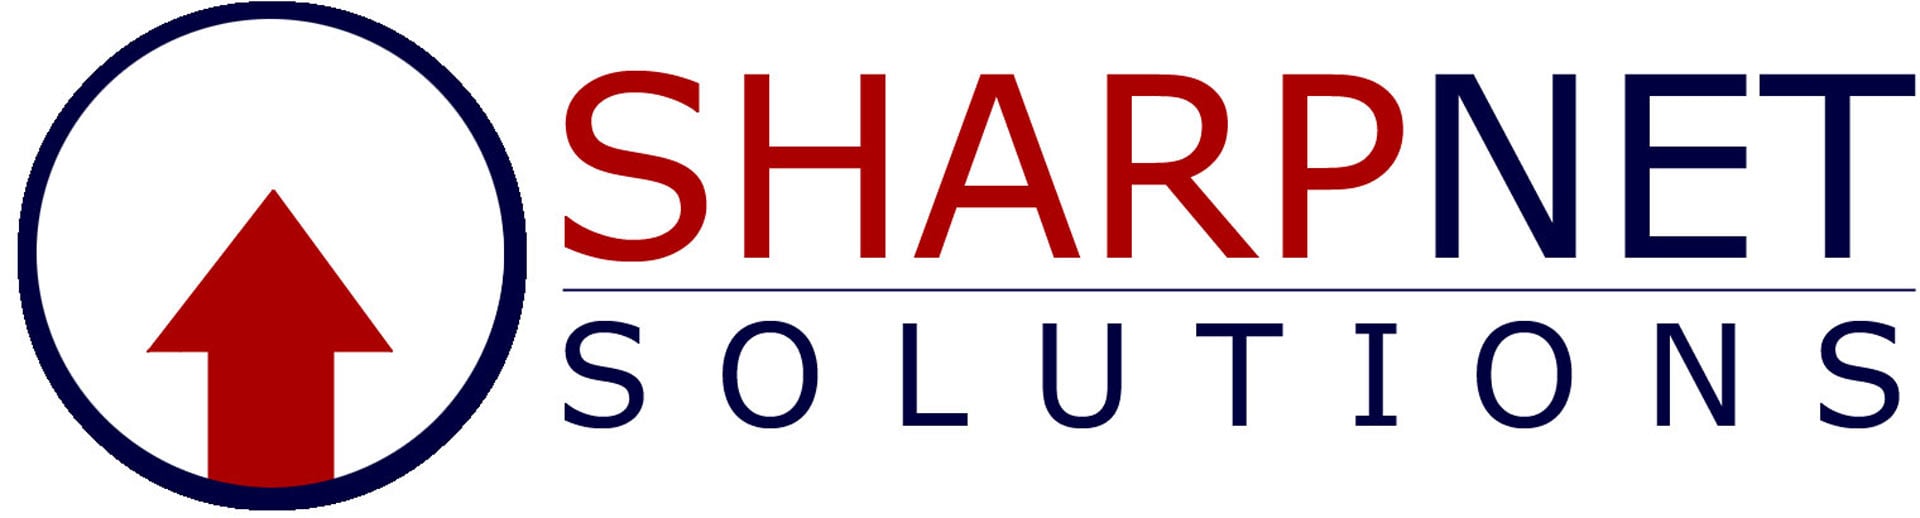 Top Social Media Marketing Company Logo: SharpNet